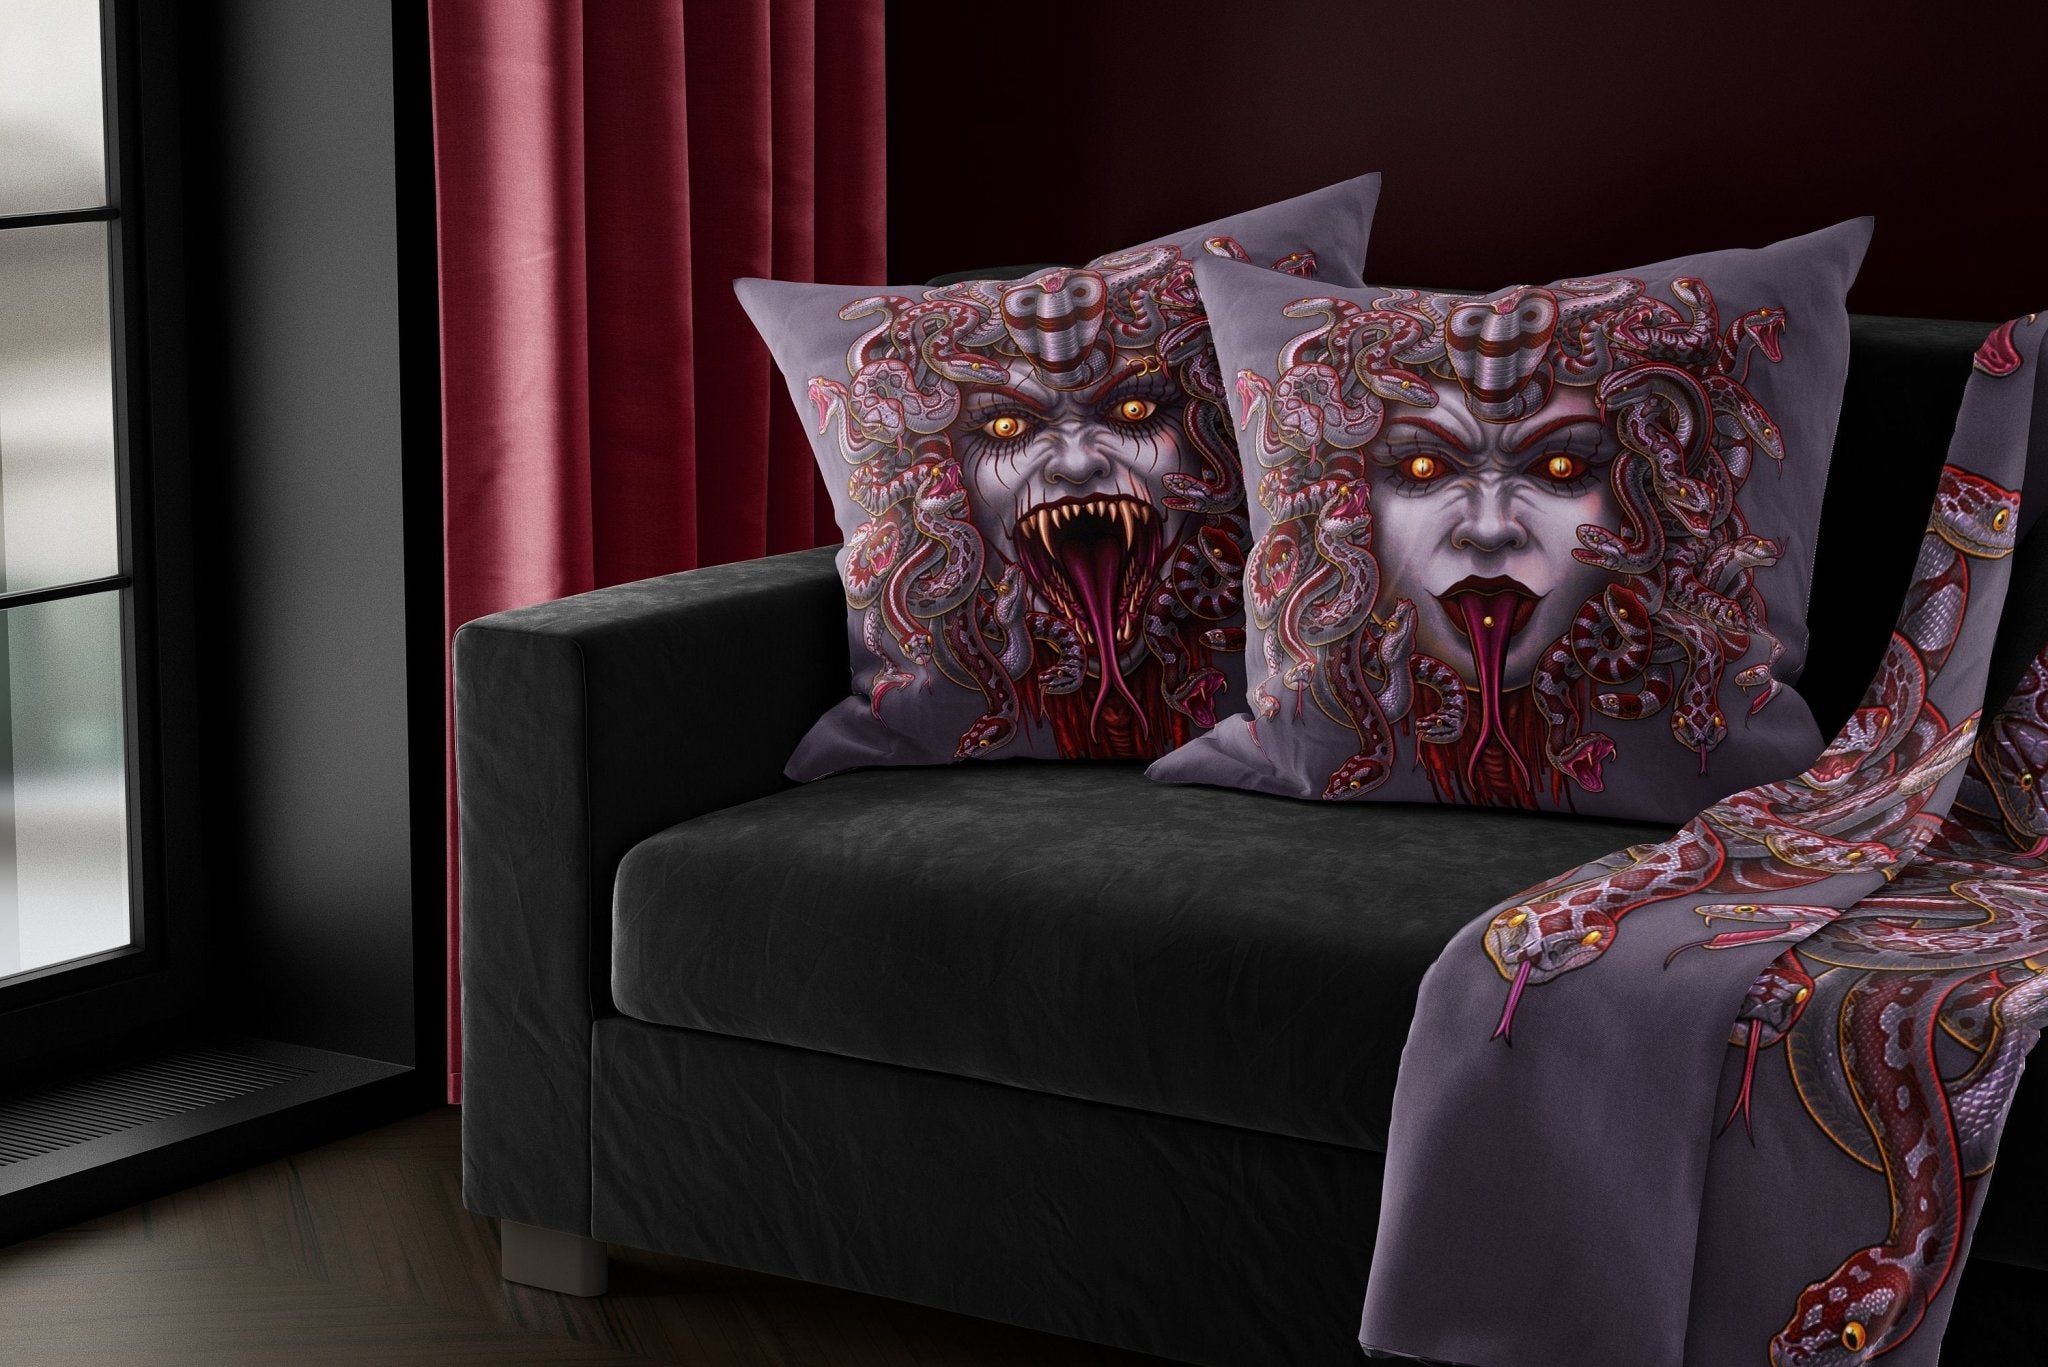 Medusa Throw Pillow, Decorative Accent Cushion, Gamer Room Decor, Goth Horror Art, Alternative Home - Grey Snakes, Bloody Ash, Scream - Abysm Internal